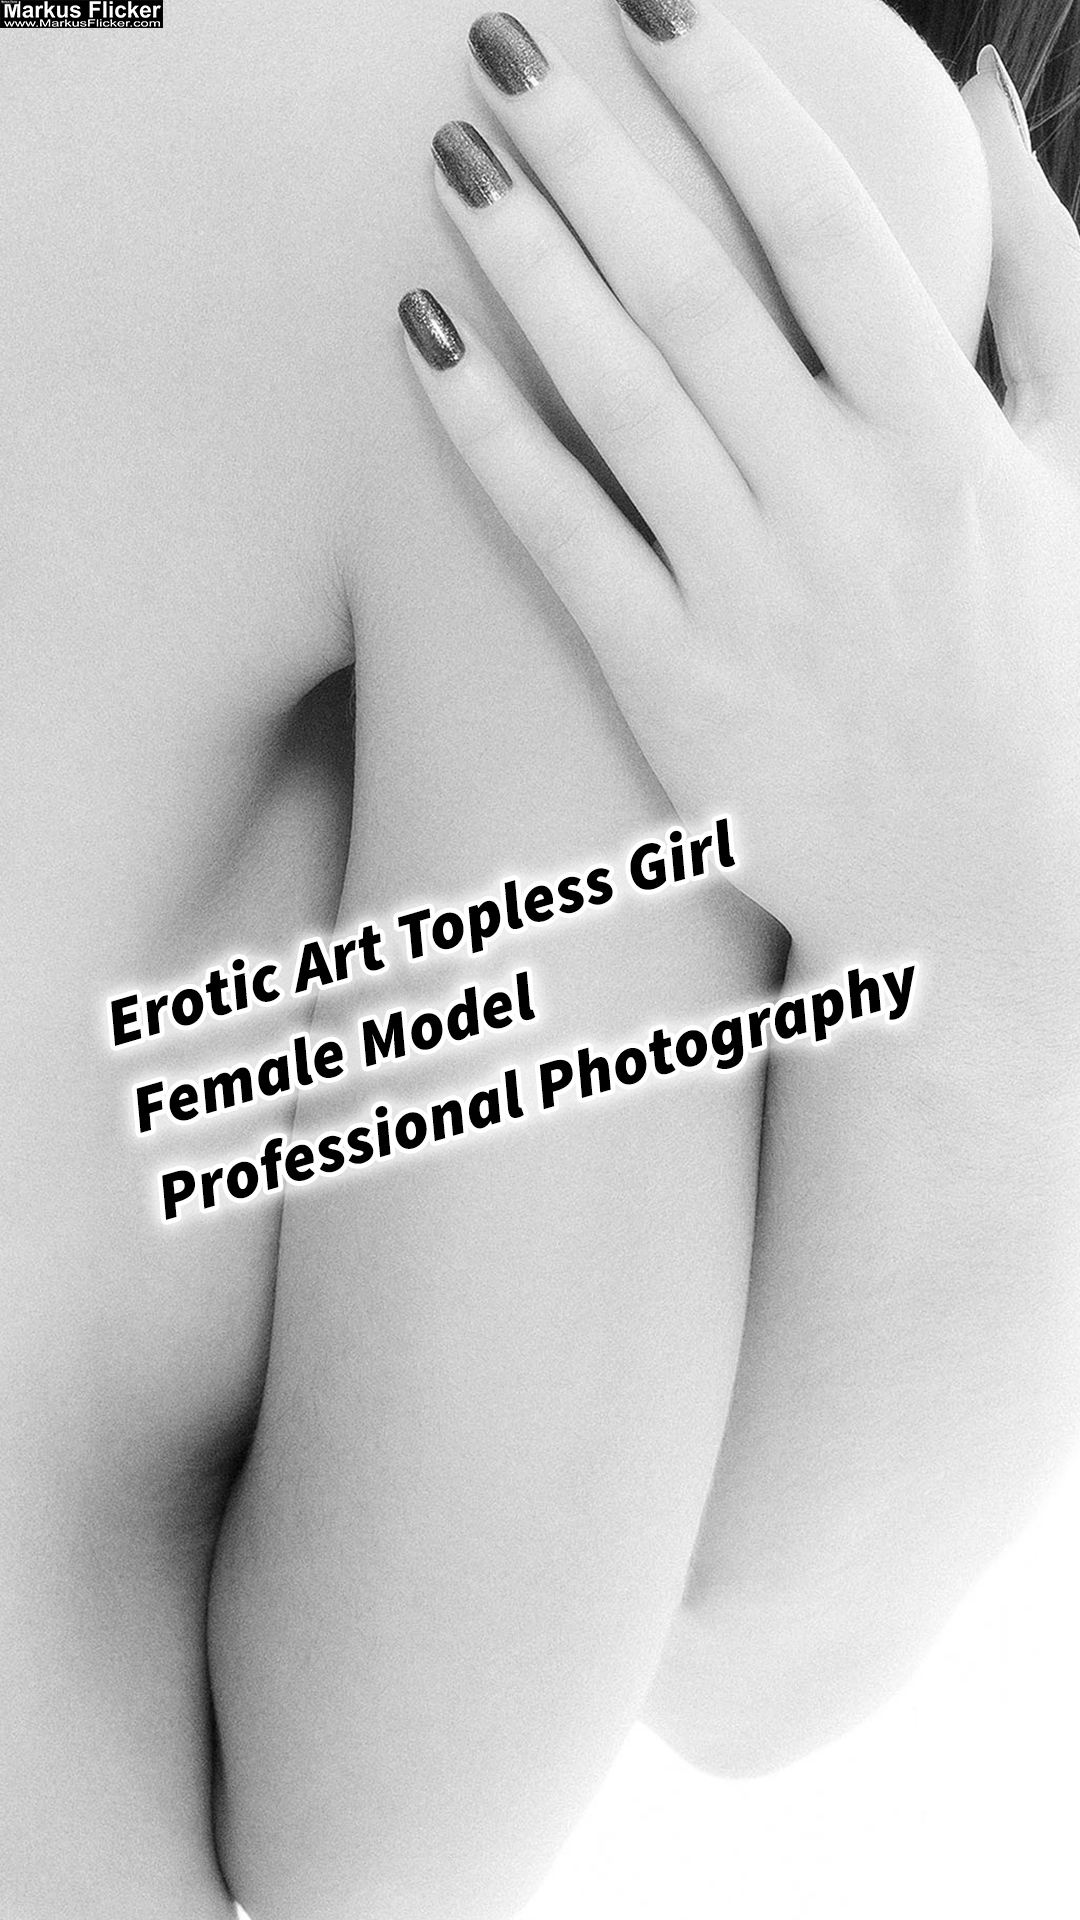 Erotic Art Topless Girl Female Model Professional Photography